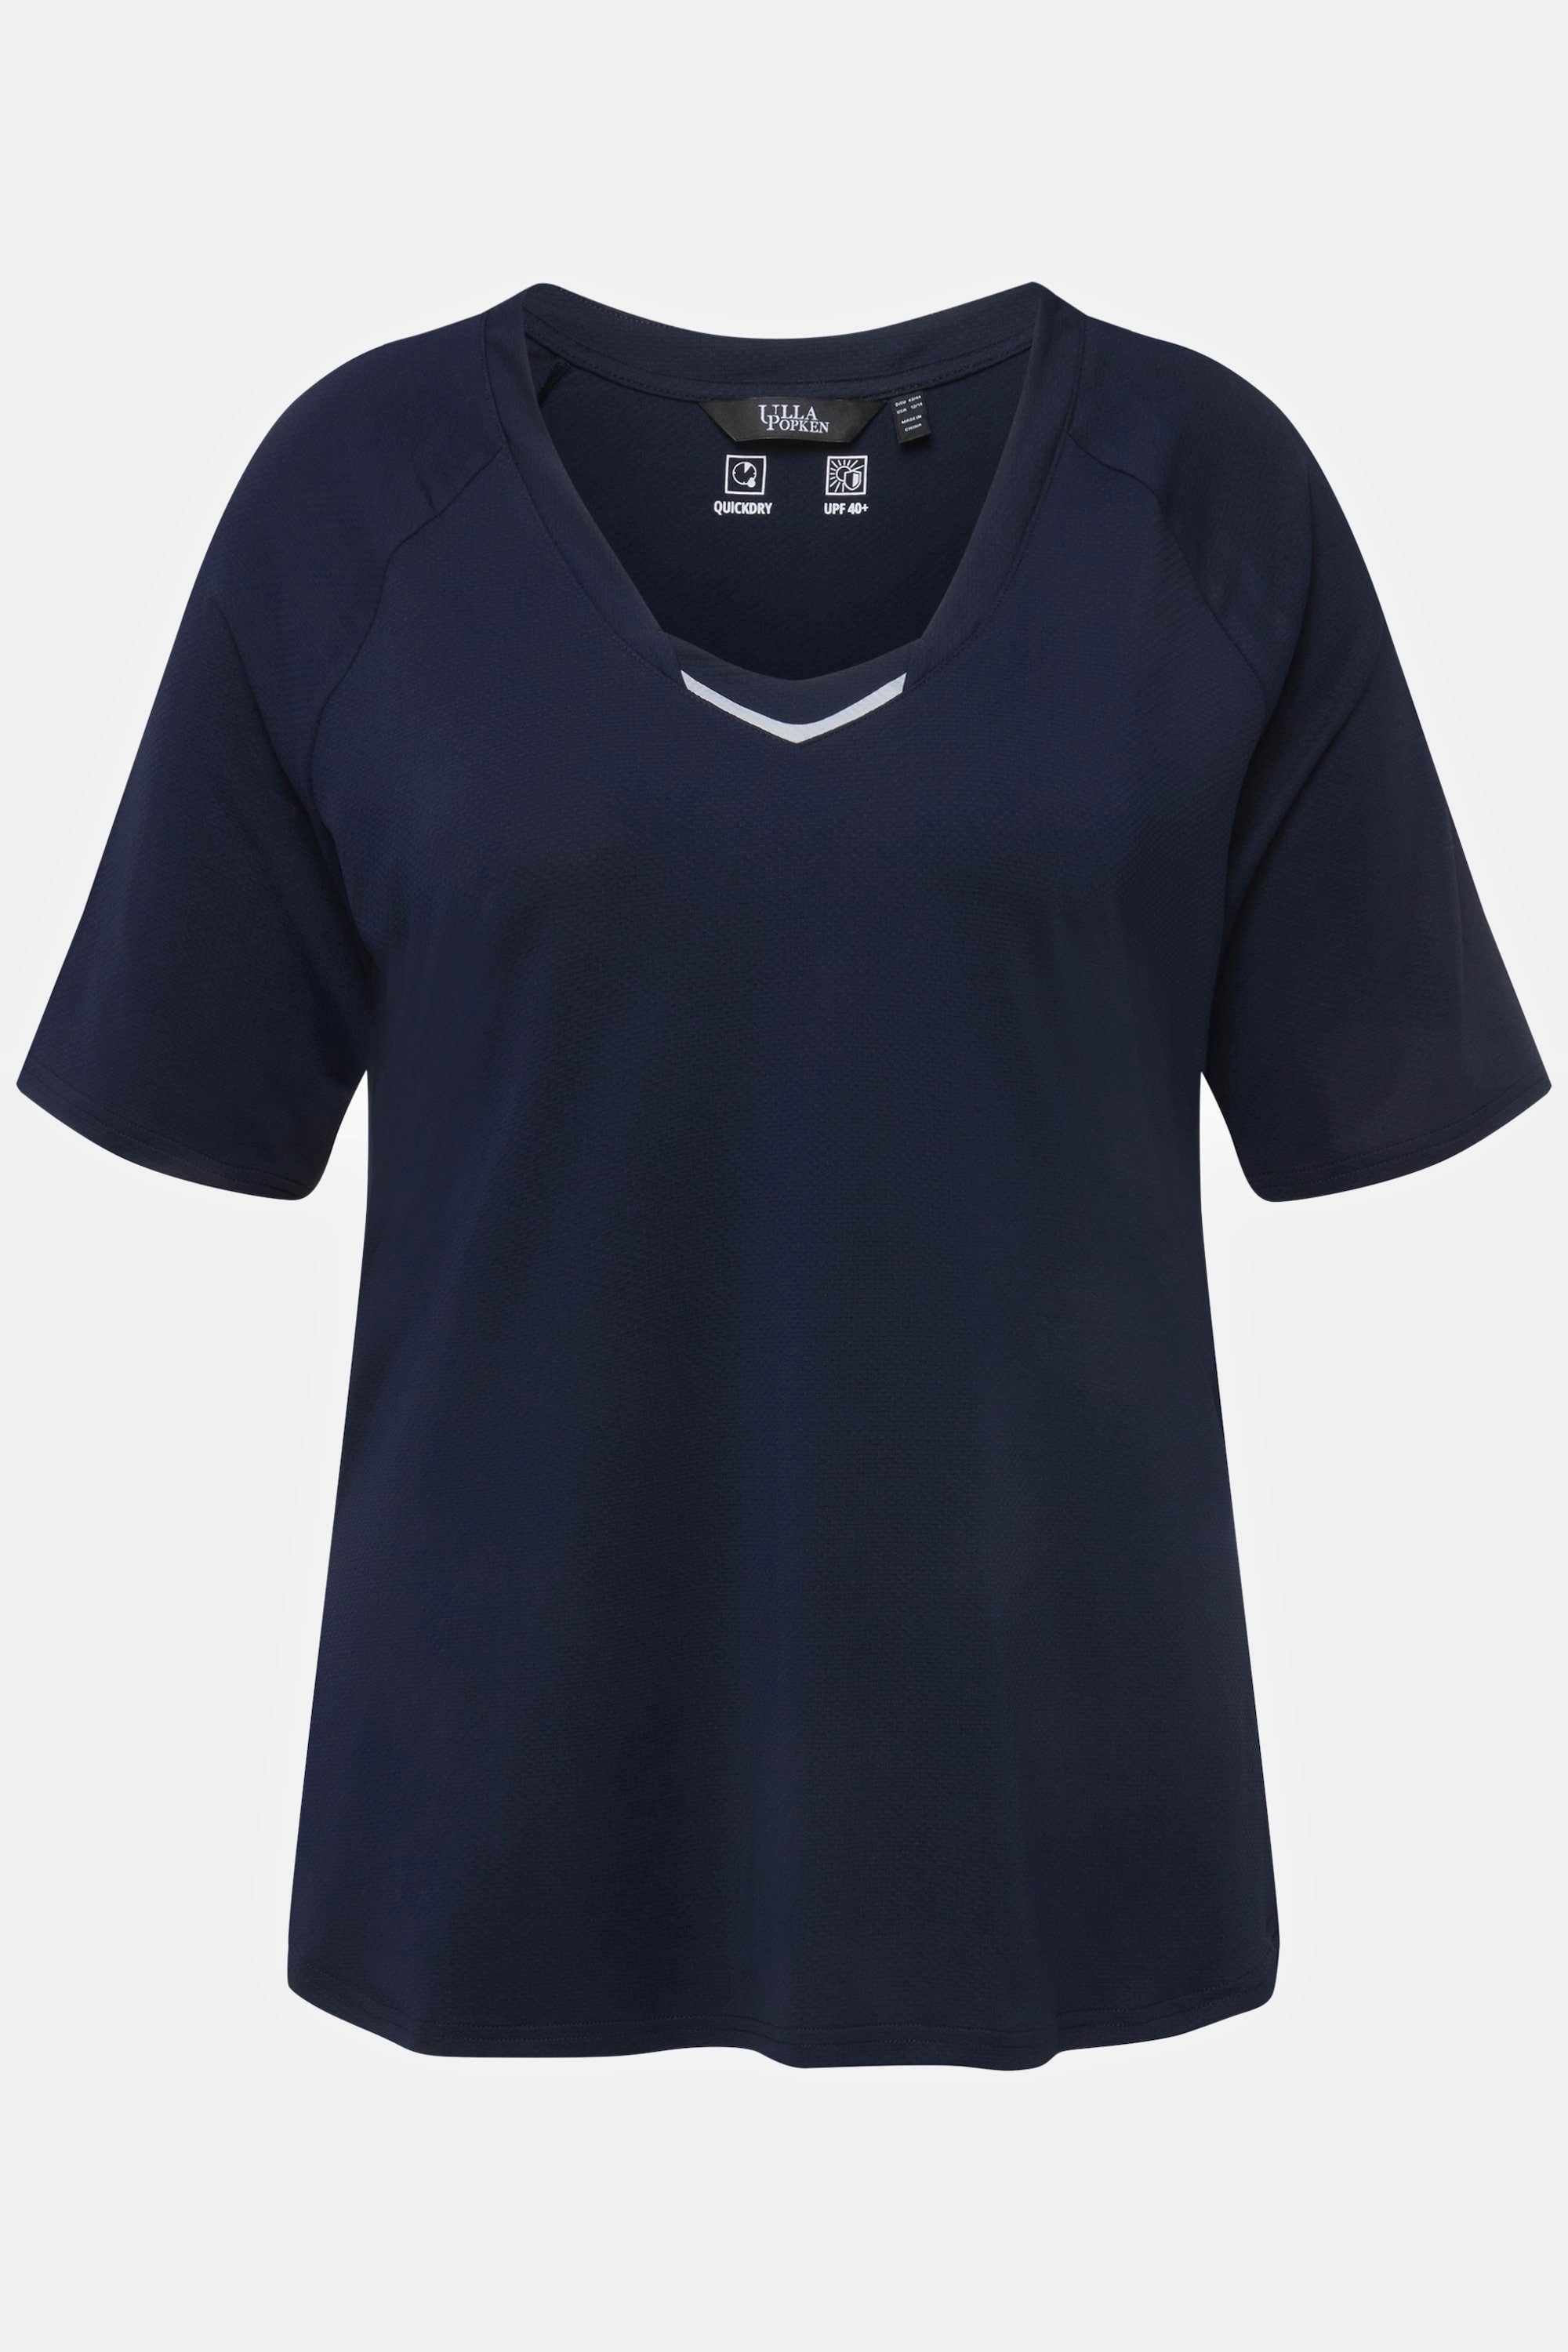 marine Rundhalsshirt Popken 40+ V-Ausschnitt UV-Schutz T-Shirt Ulla Halbarm